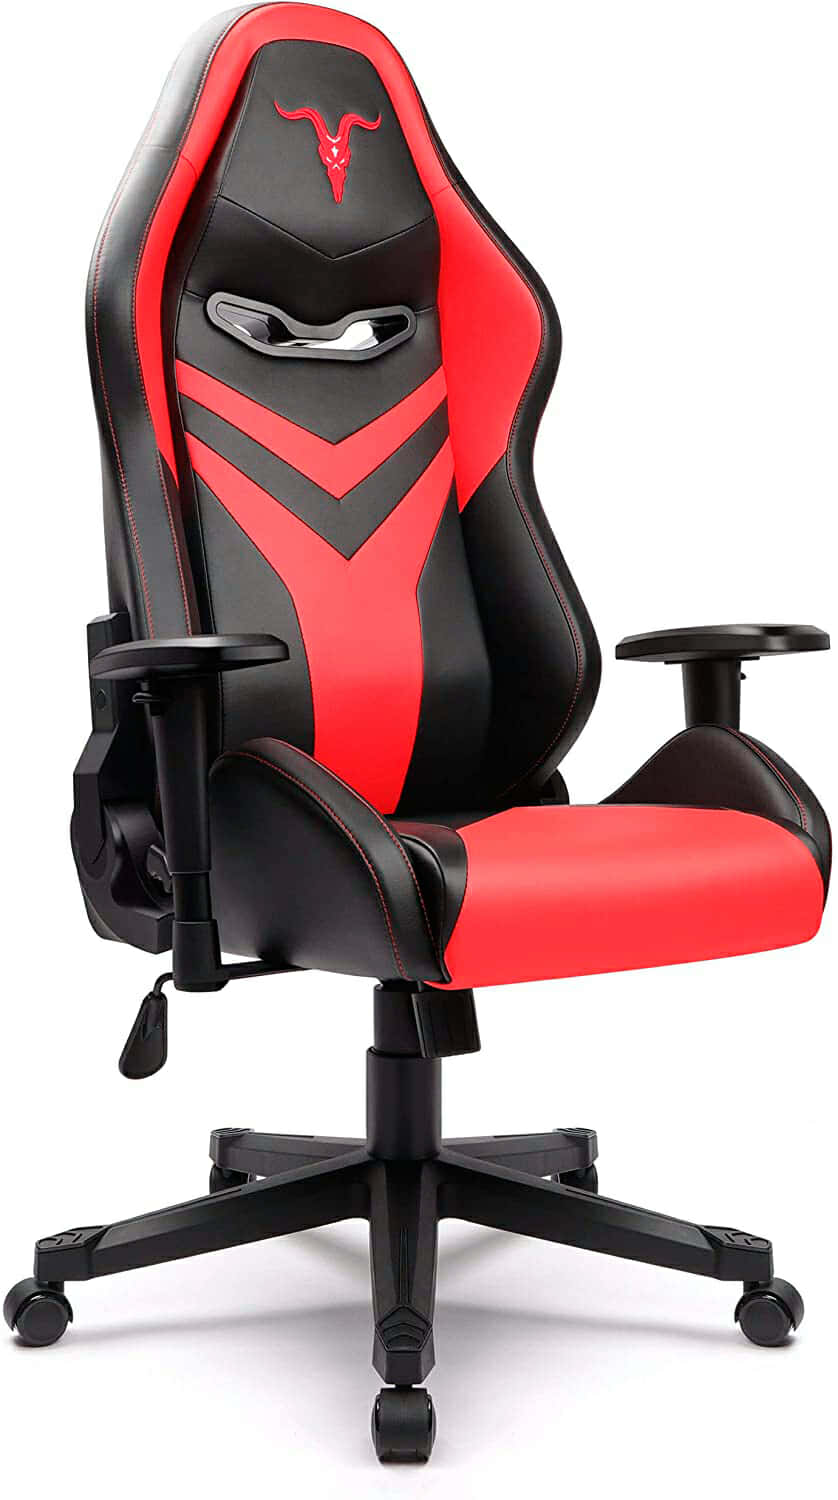 Furgle Silla para videojuegos, estilo carreras, silla de oficina de respaldo alto con reposabrazos ajustables 4D, silla giratoria ergonómica, para videojuegos con modo balancín (negro y rojo1)